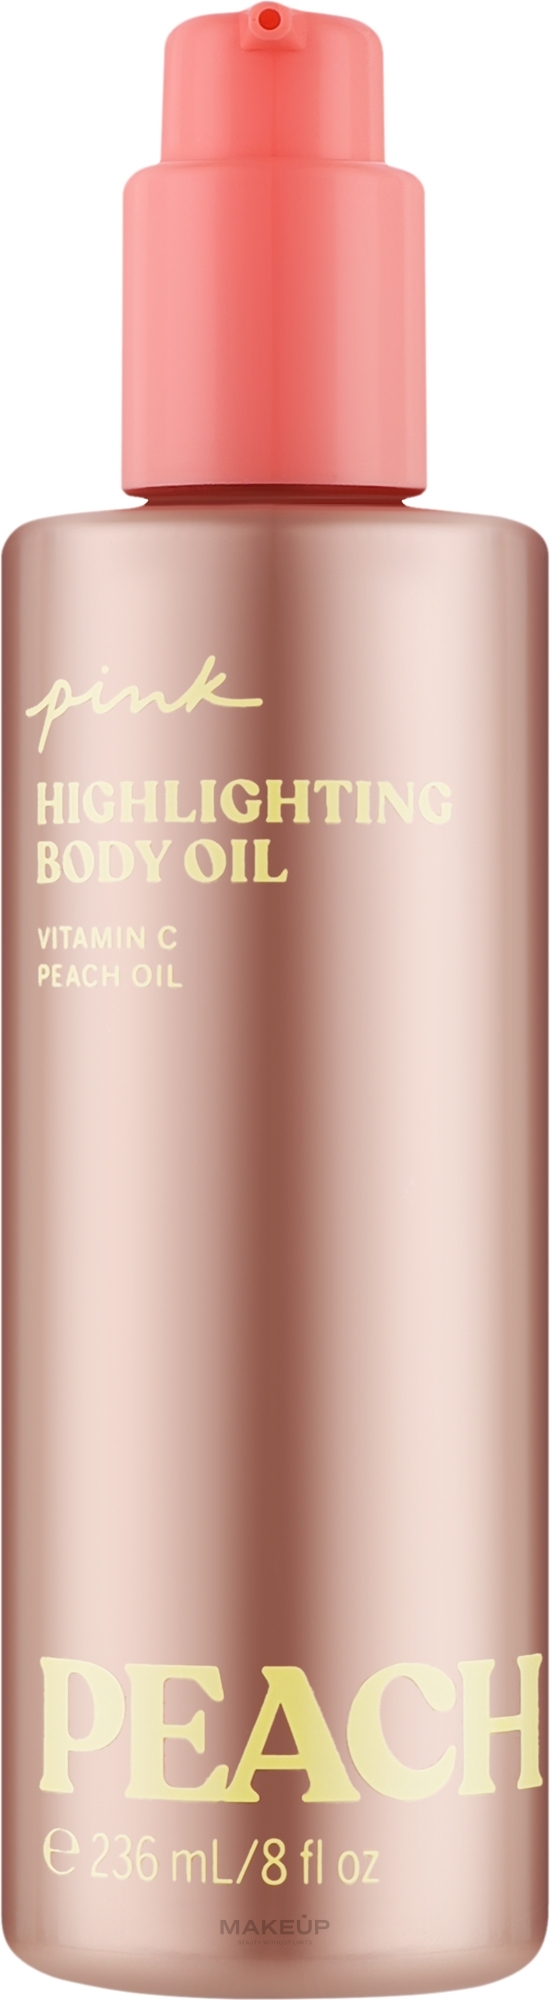 Олія для тіла з хайлайтером - Victoria's Secret Pink Highlighting Body Oil Peach — фото 236ml